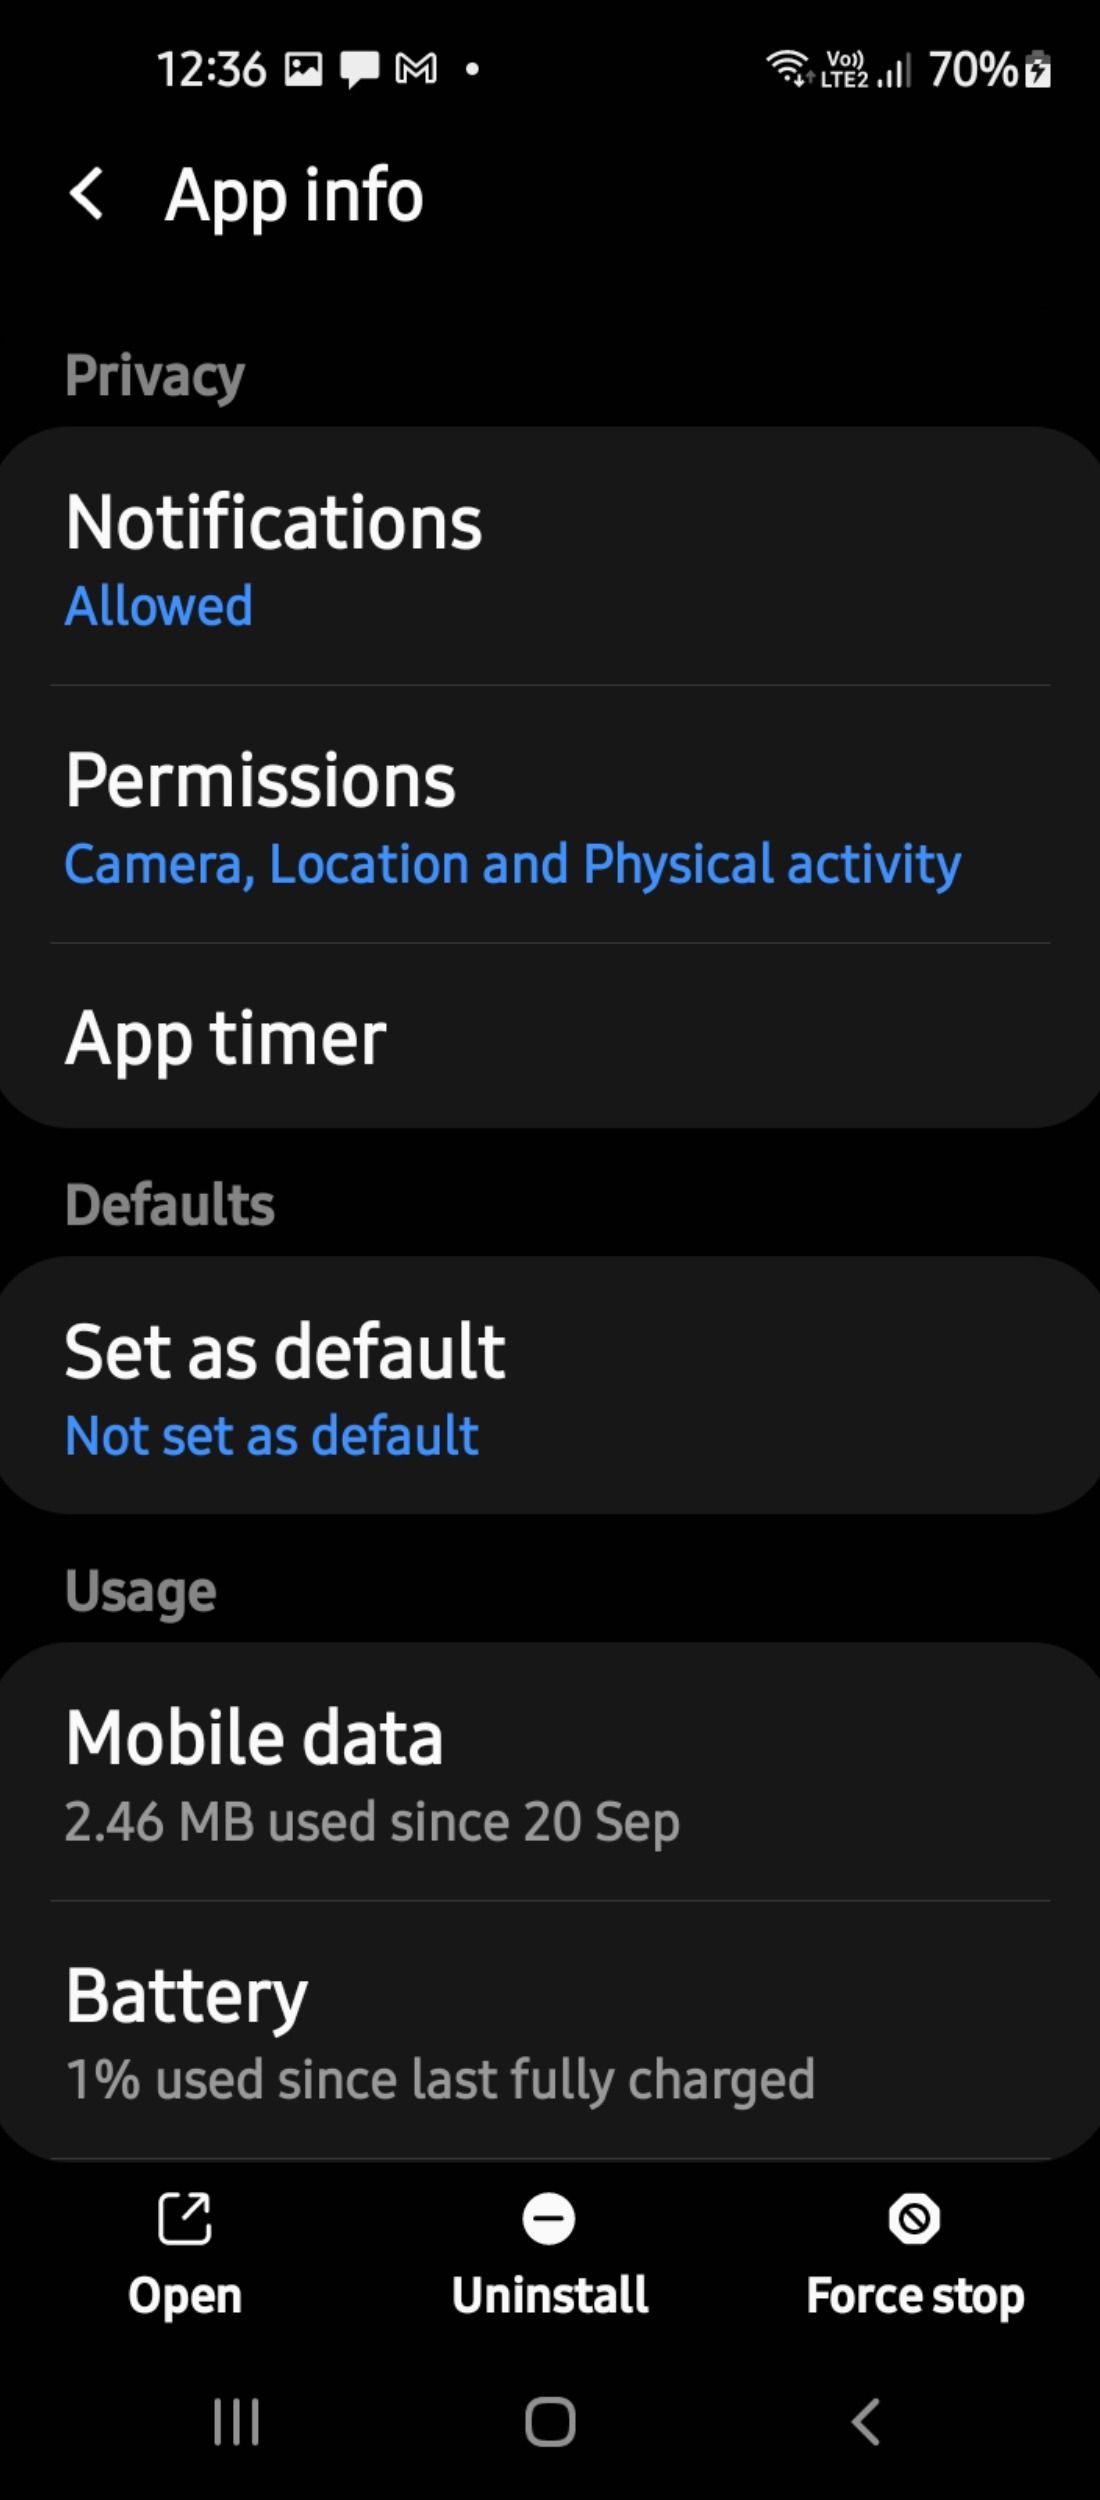 Google Fit permission settings